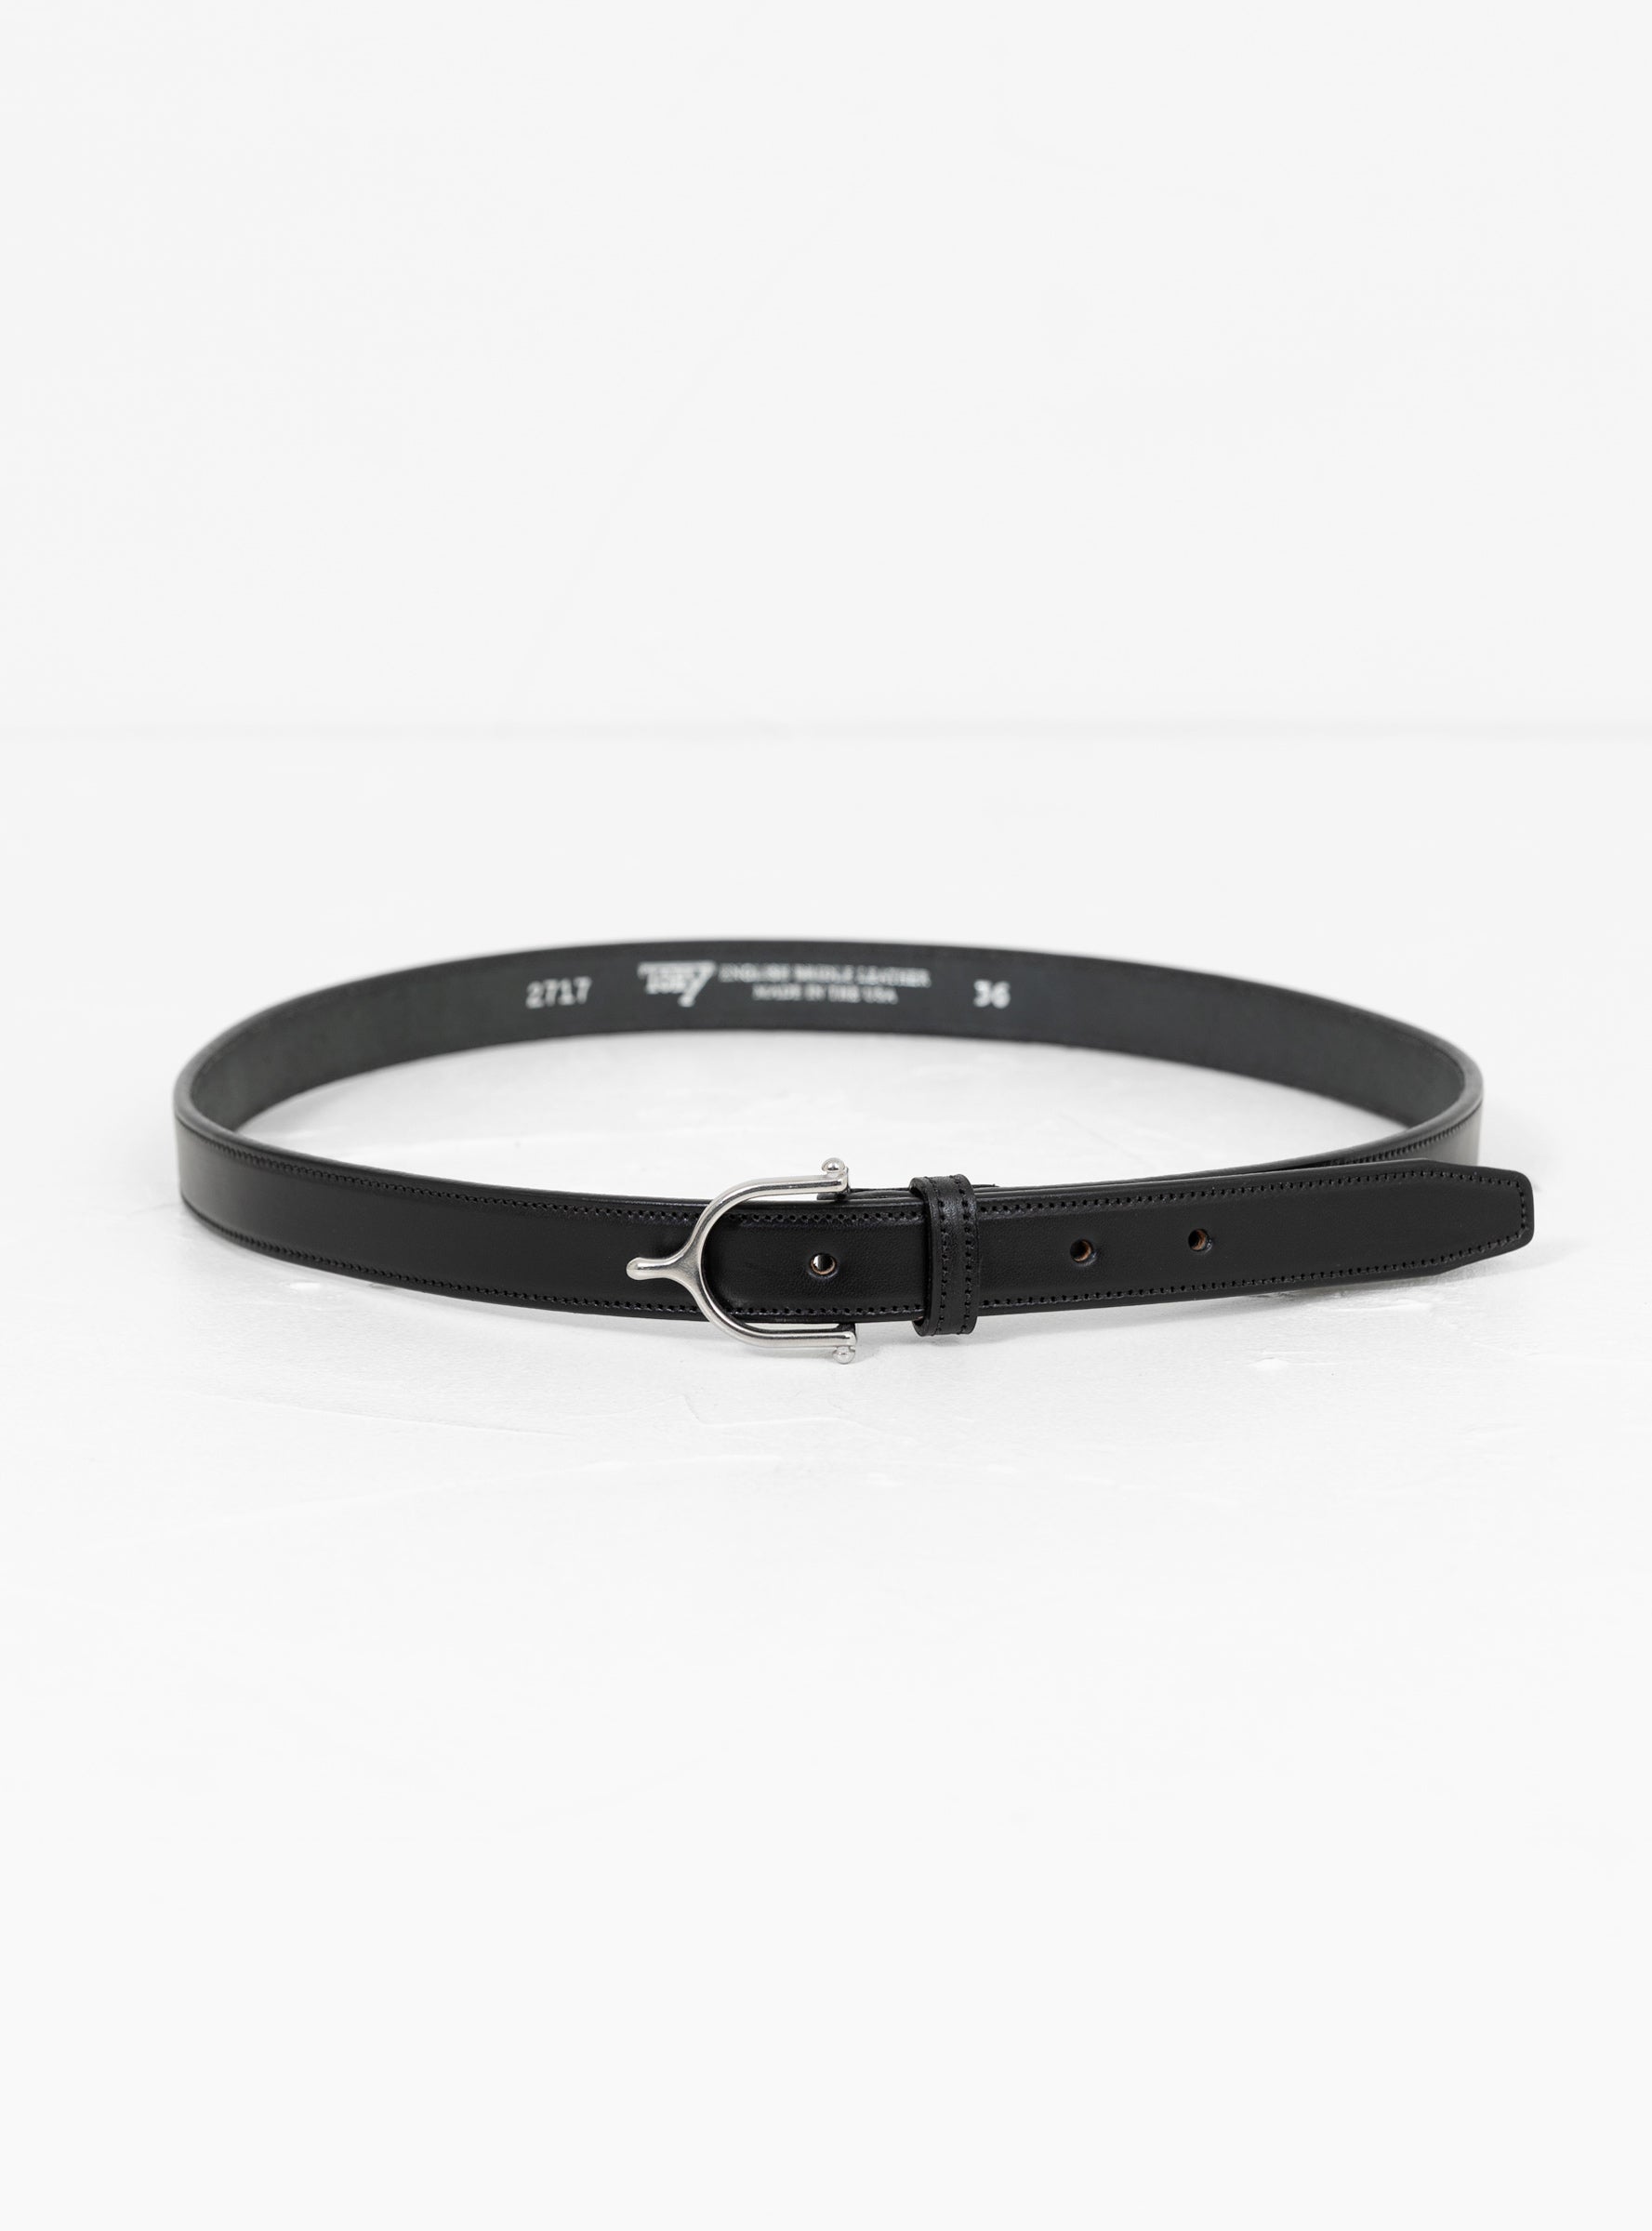  Tory Leather Spur Belt Black & Nickel - XL